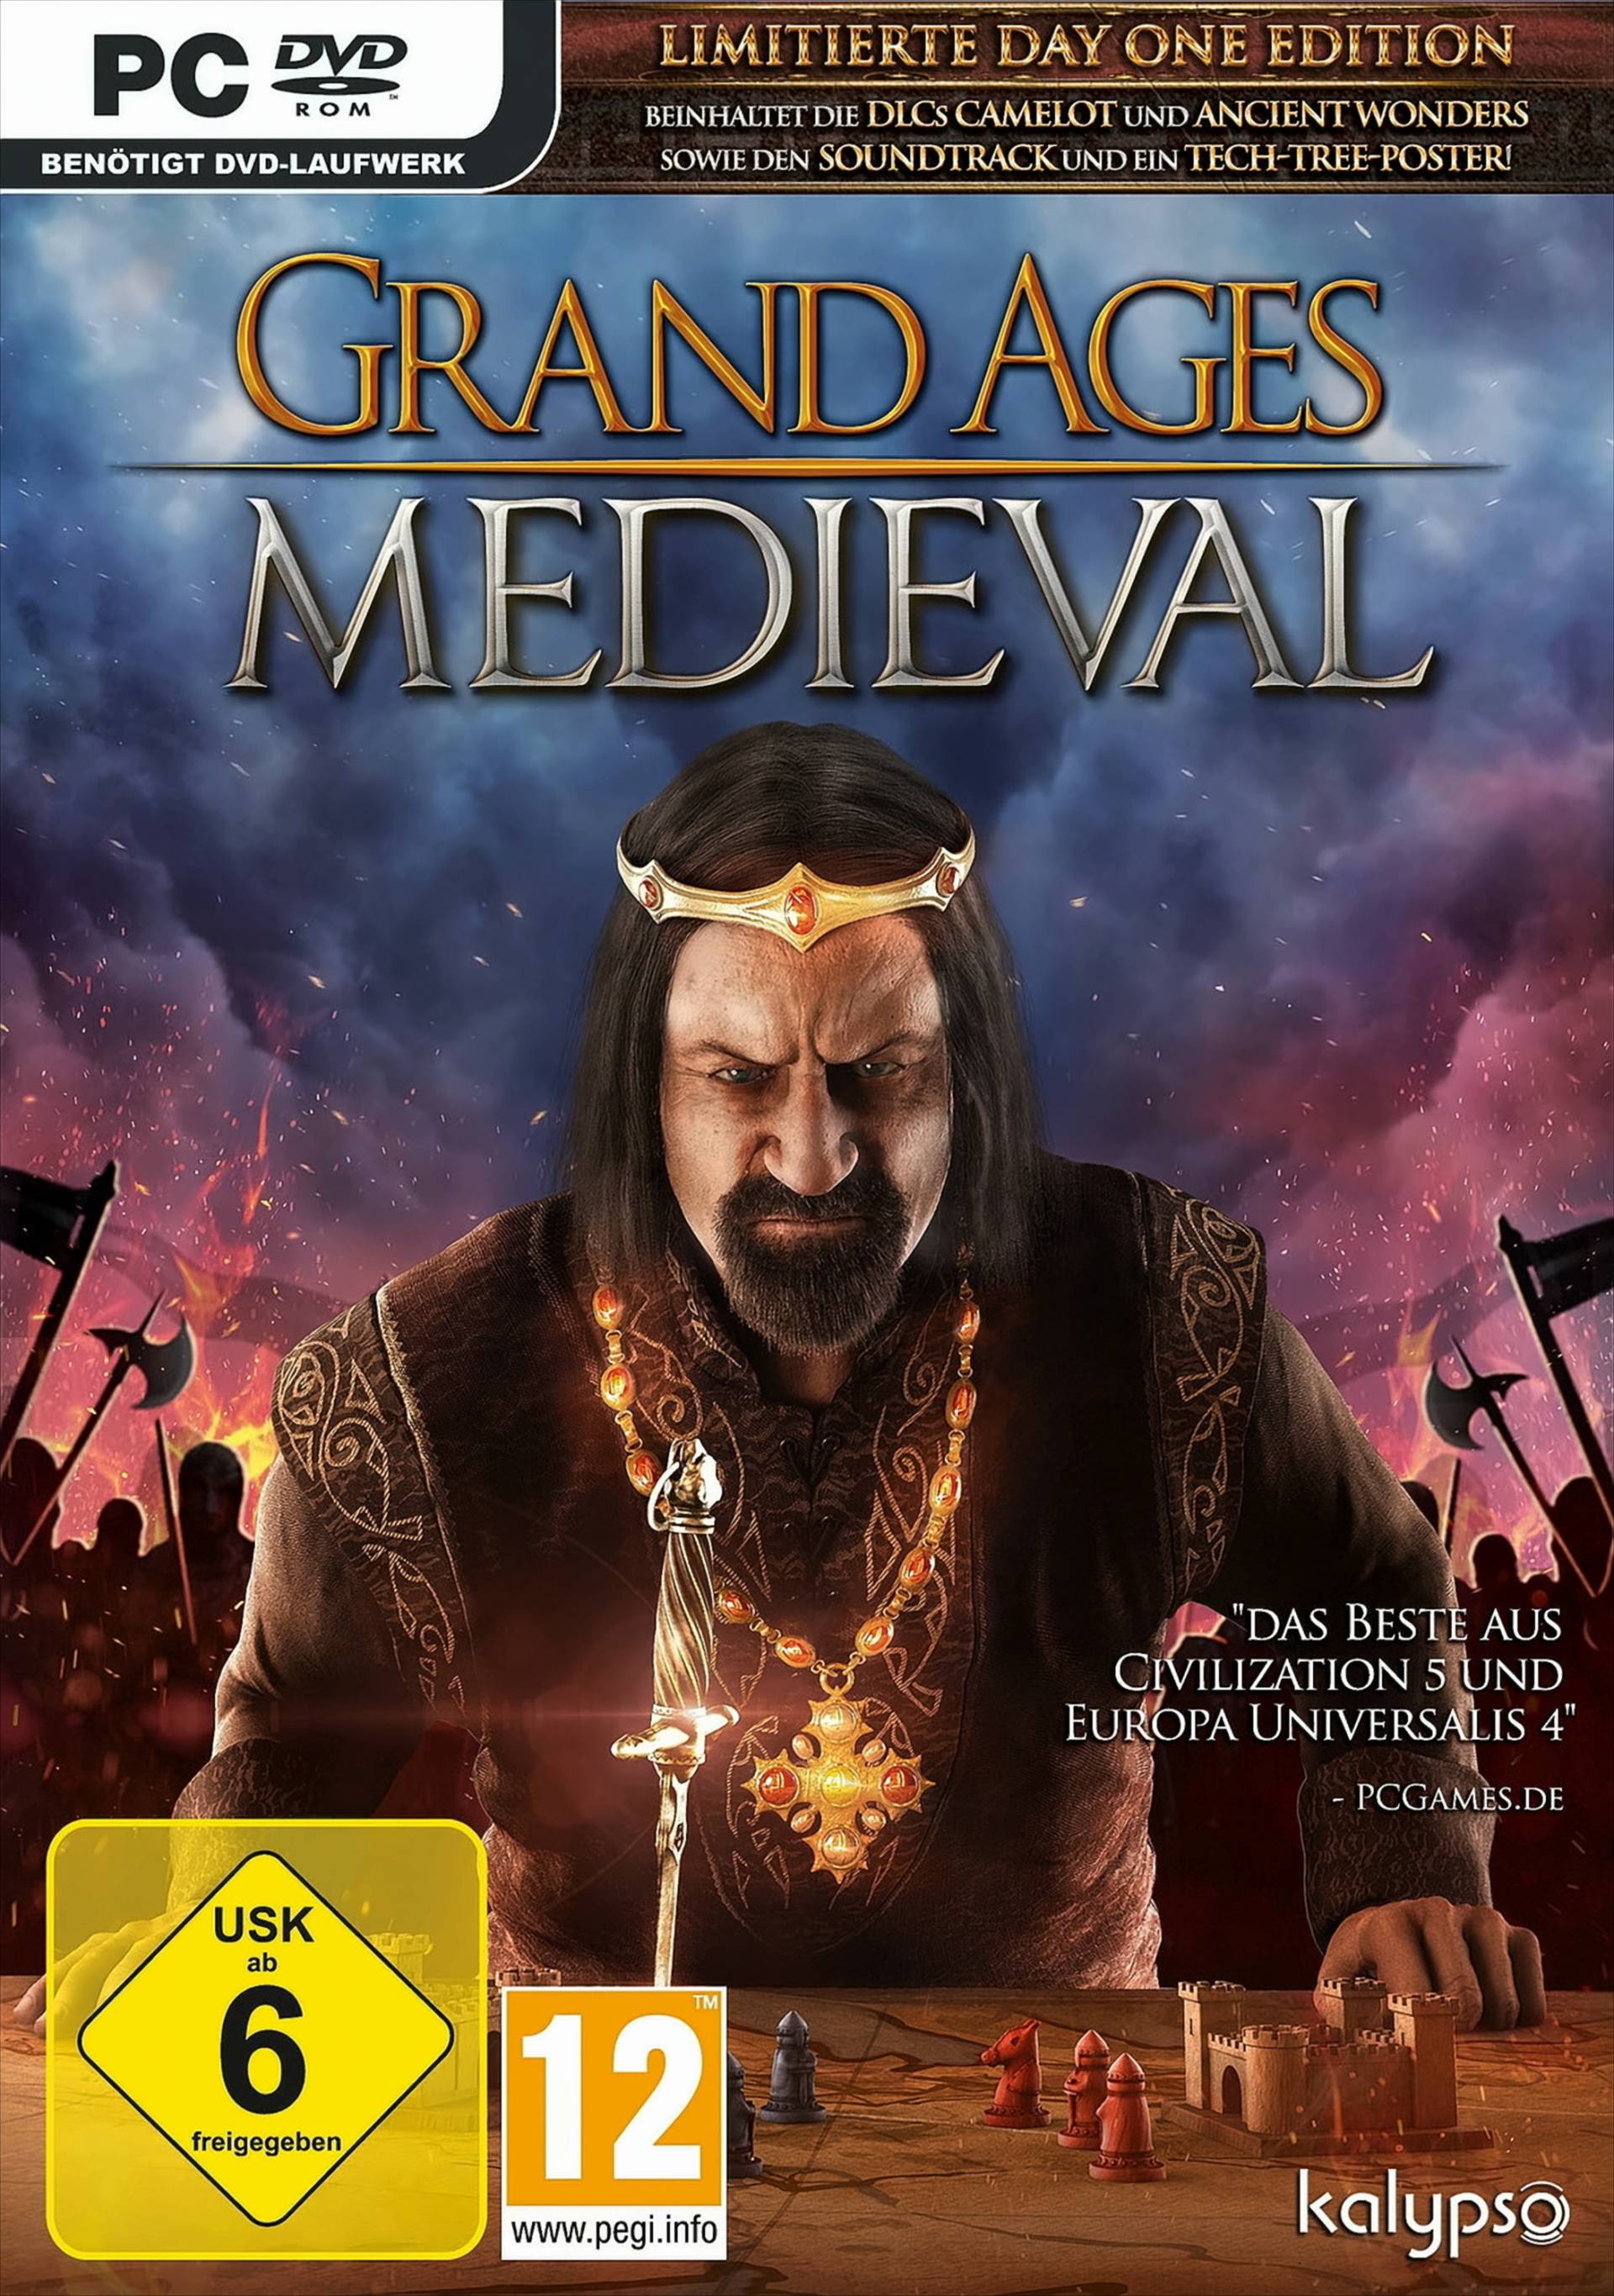 Grand Ages: Medieval - Limitierte Day One Edition von Kalypso Media